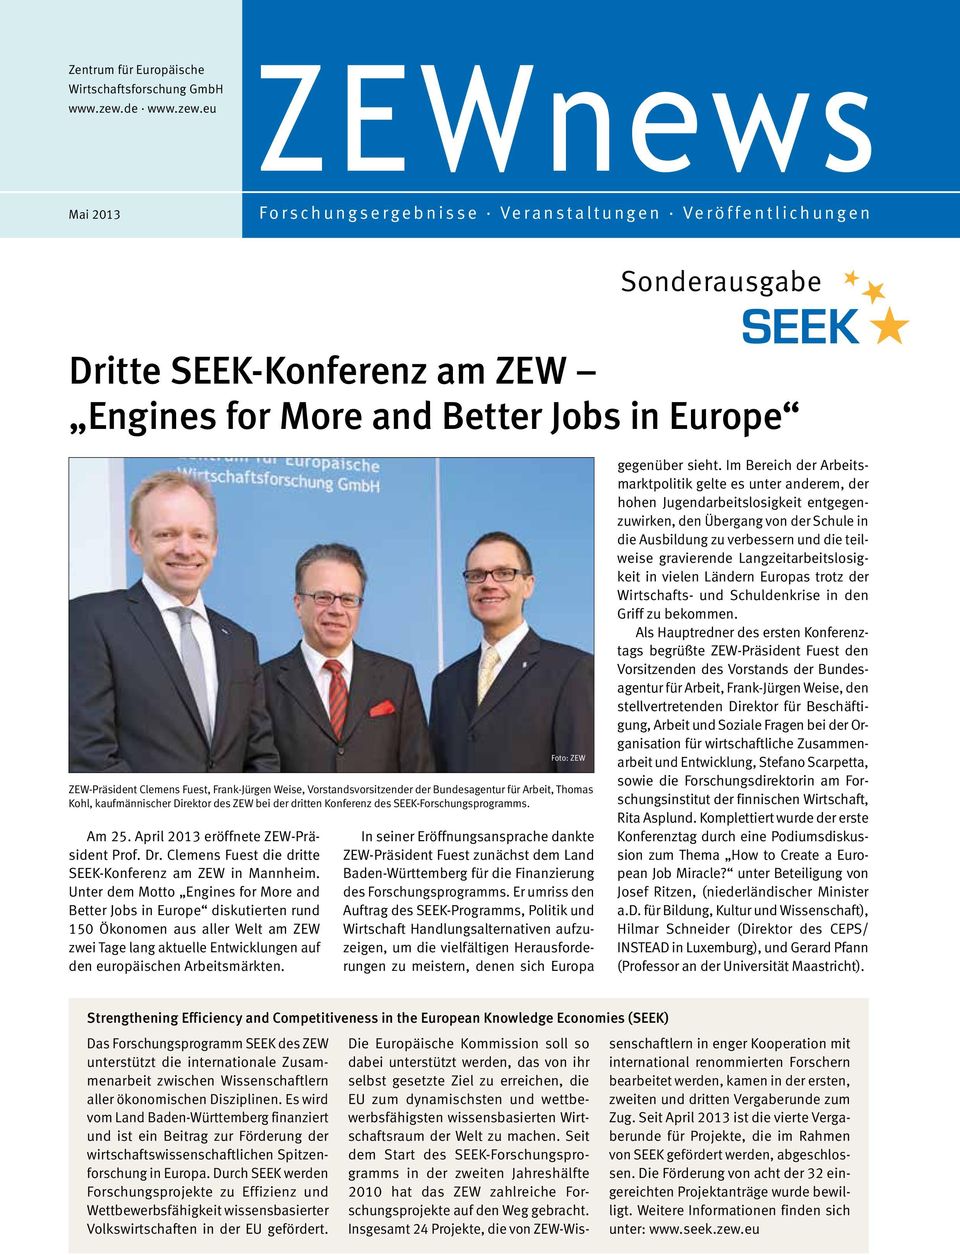 April 2013 eröffnete ZEW-Präsident Prof. Dr. Clemens Fuest die dritte SEEK-Konferenz am ZEW in Mannheim.